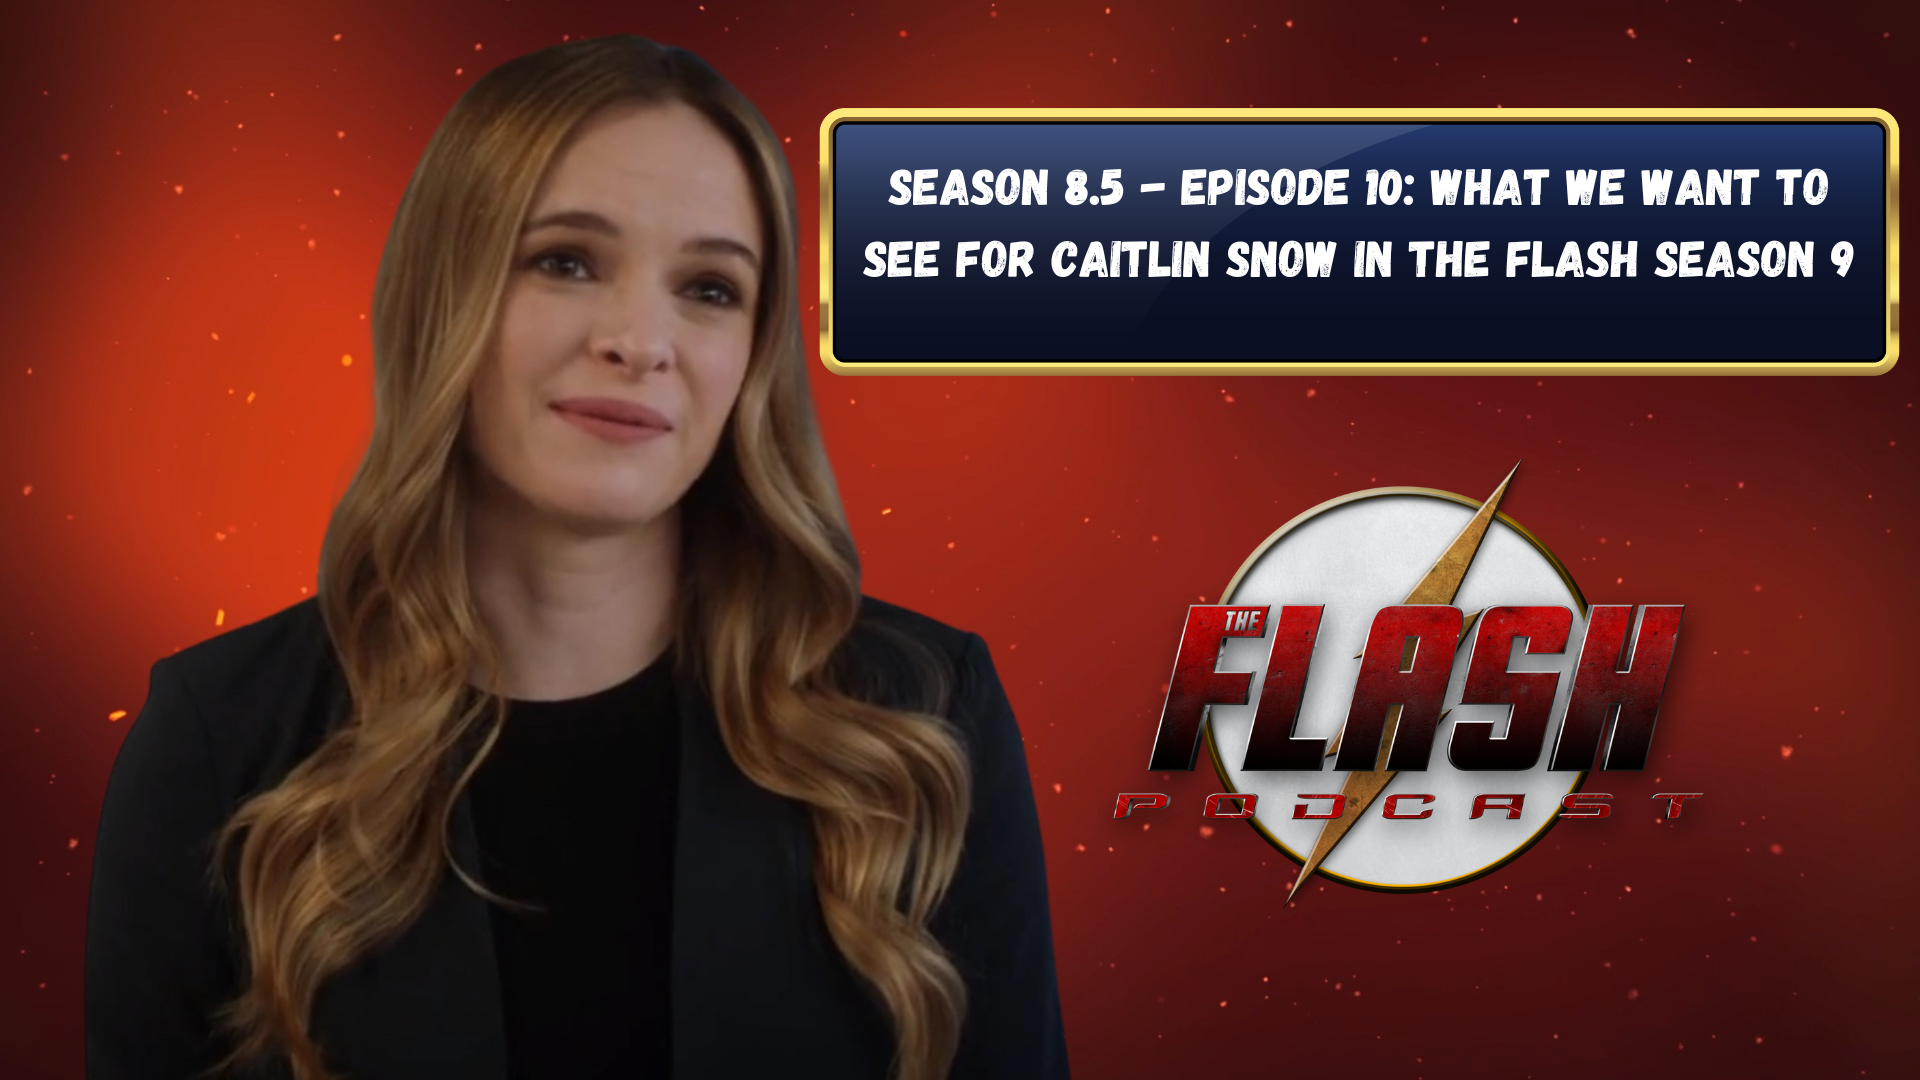 The Flash Podcast Season 8.5 - Episode 10